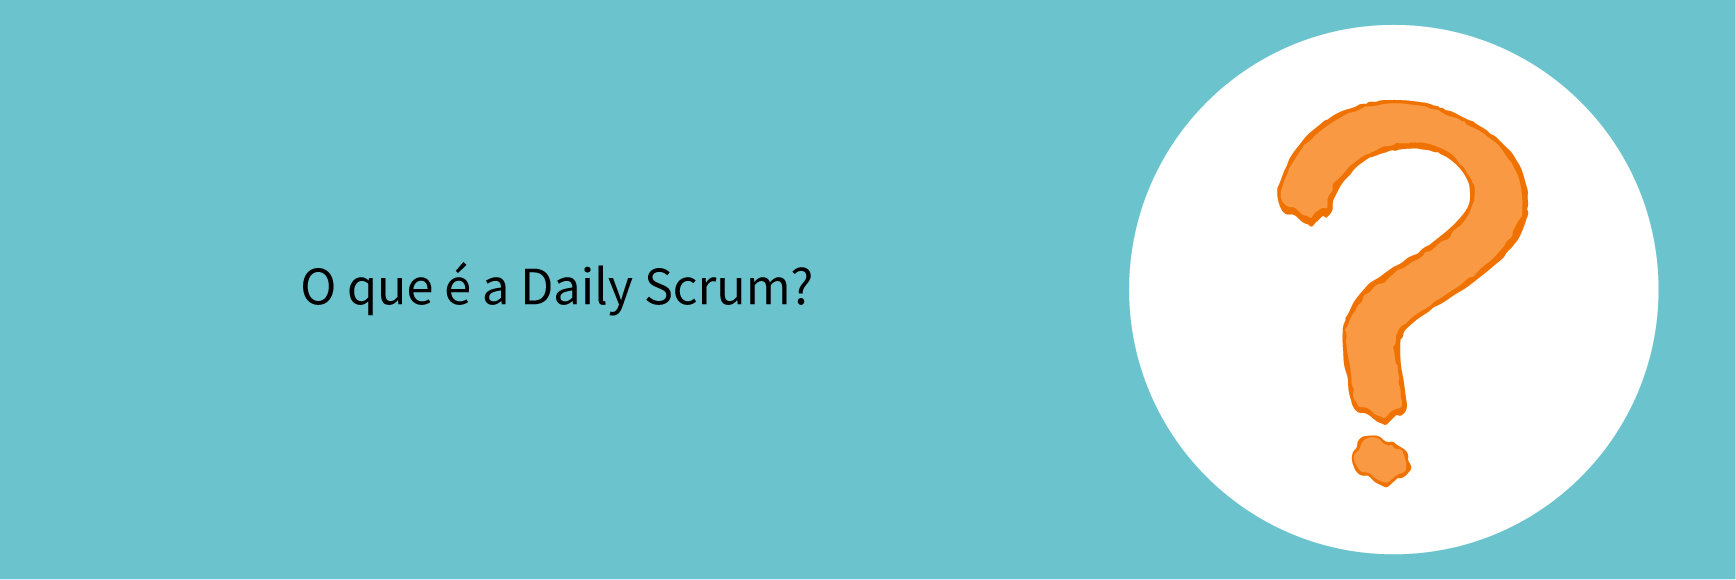 O que é a Daily Scrum?